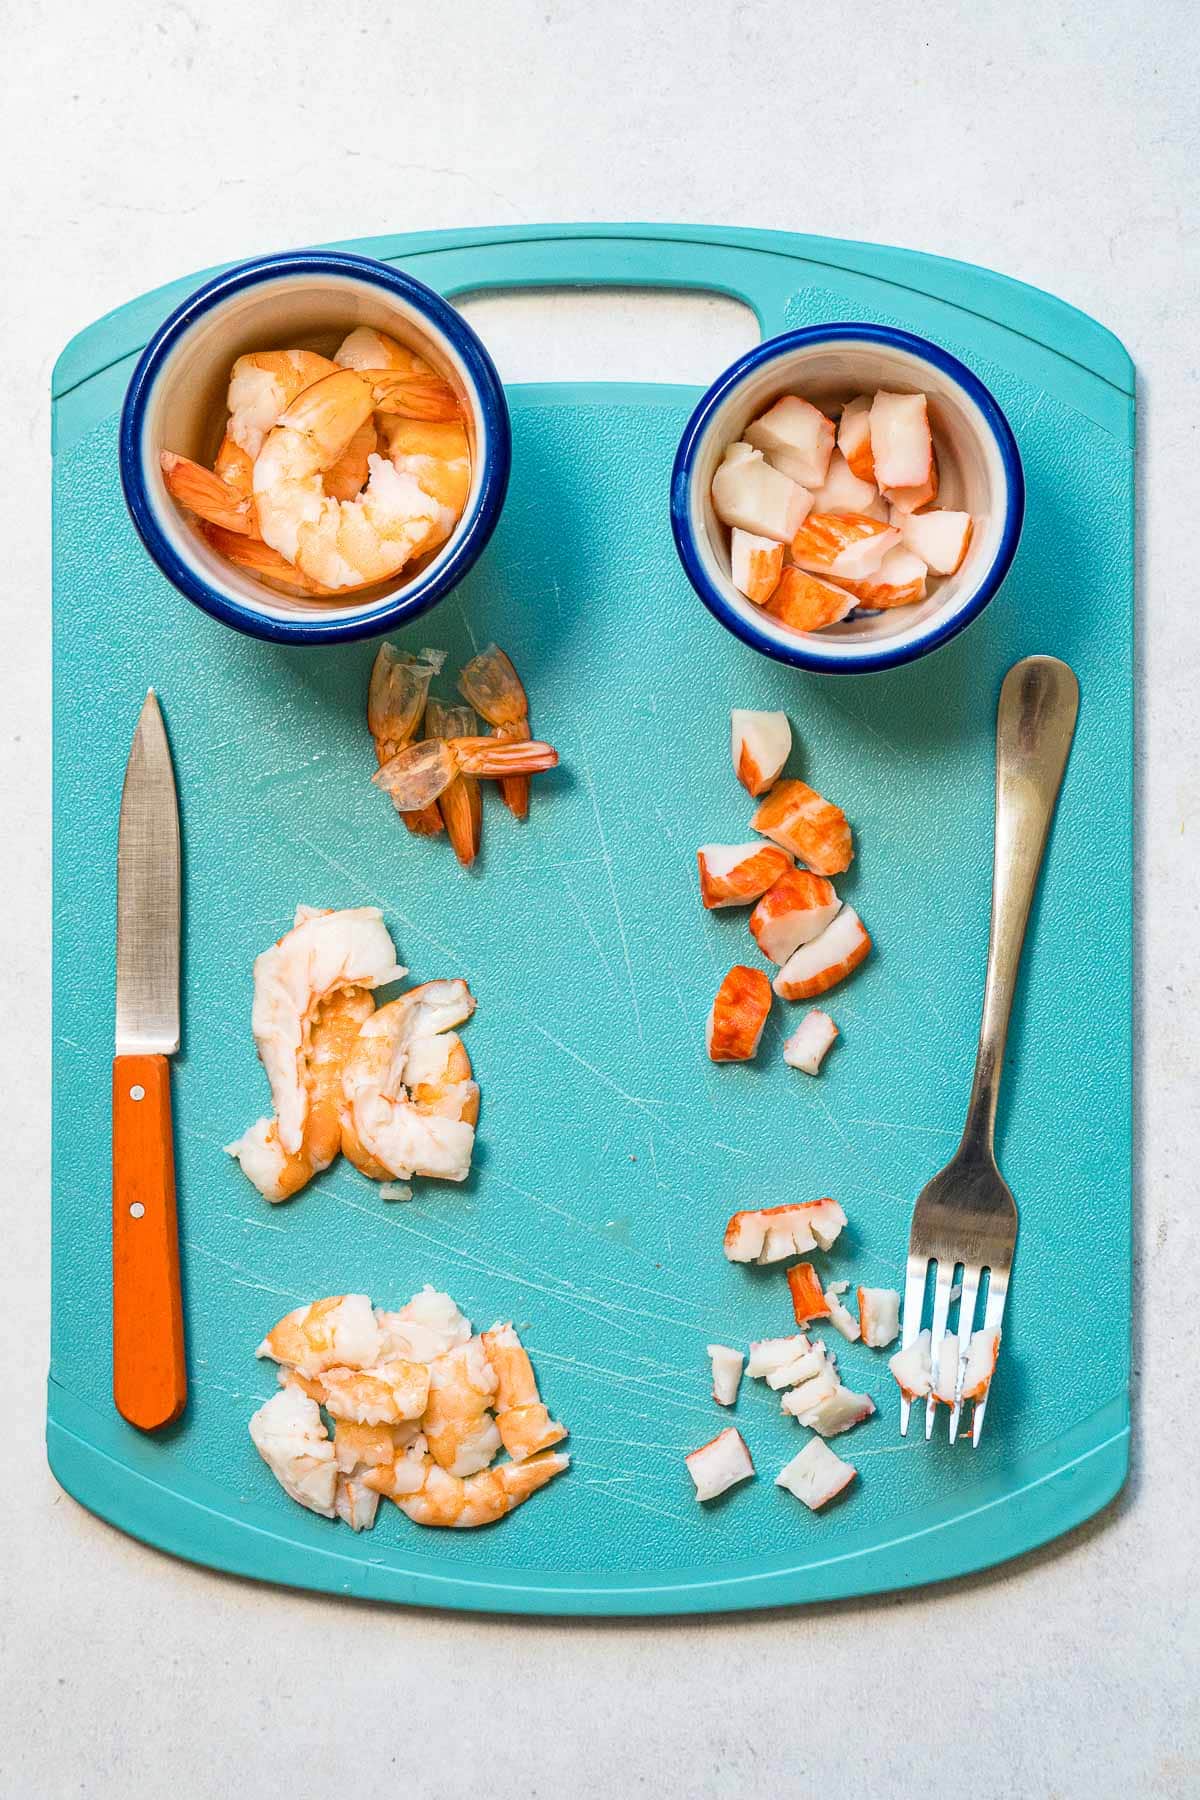 Shrimp and imitation crab on a blue cutting board